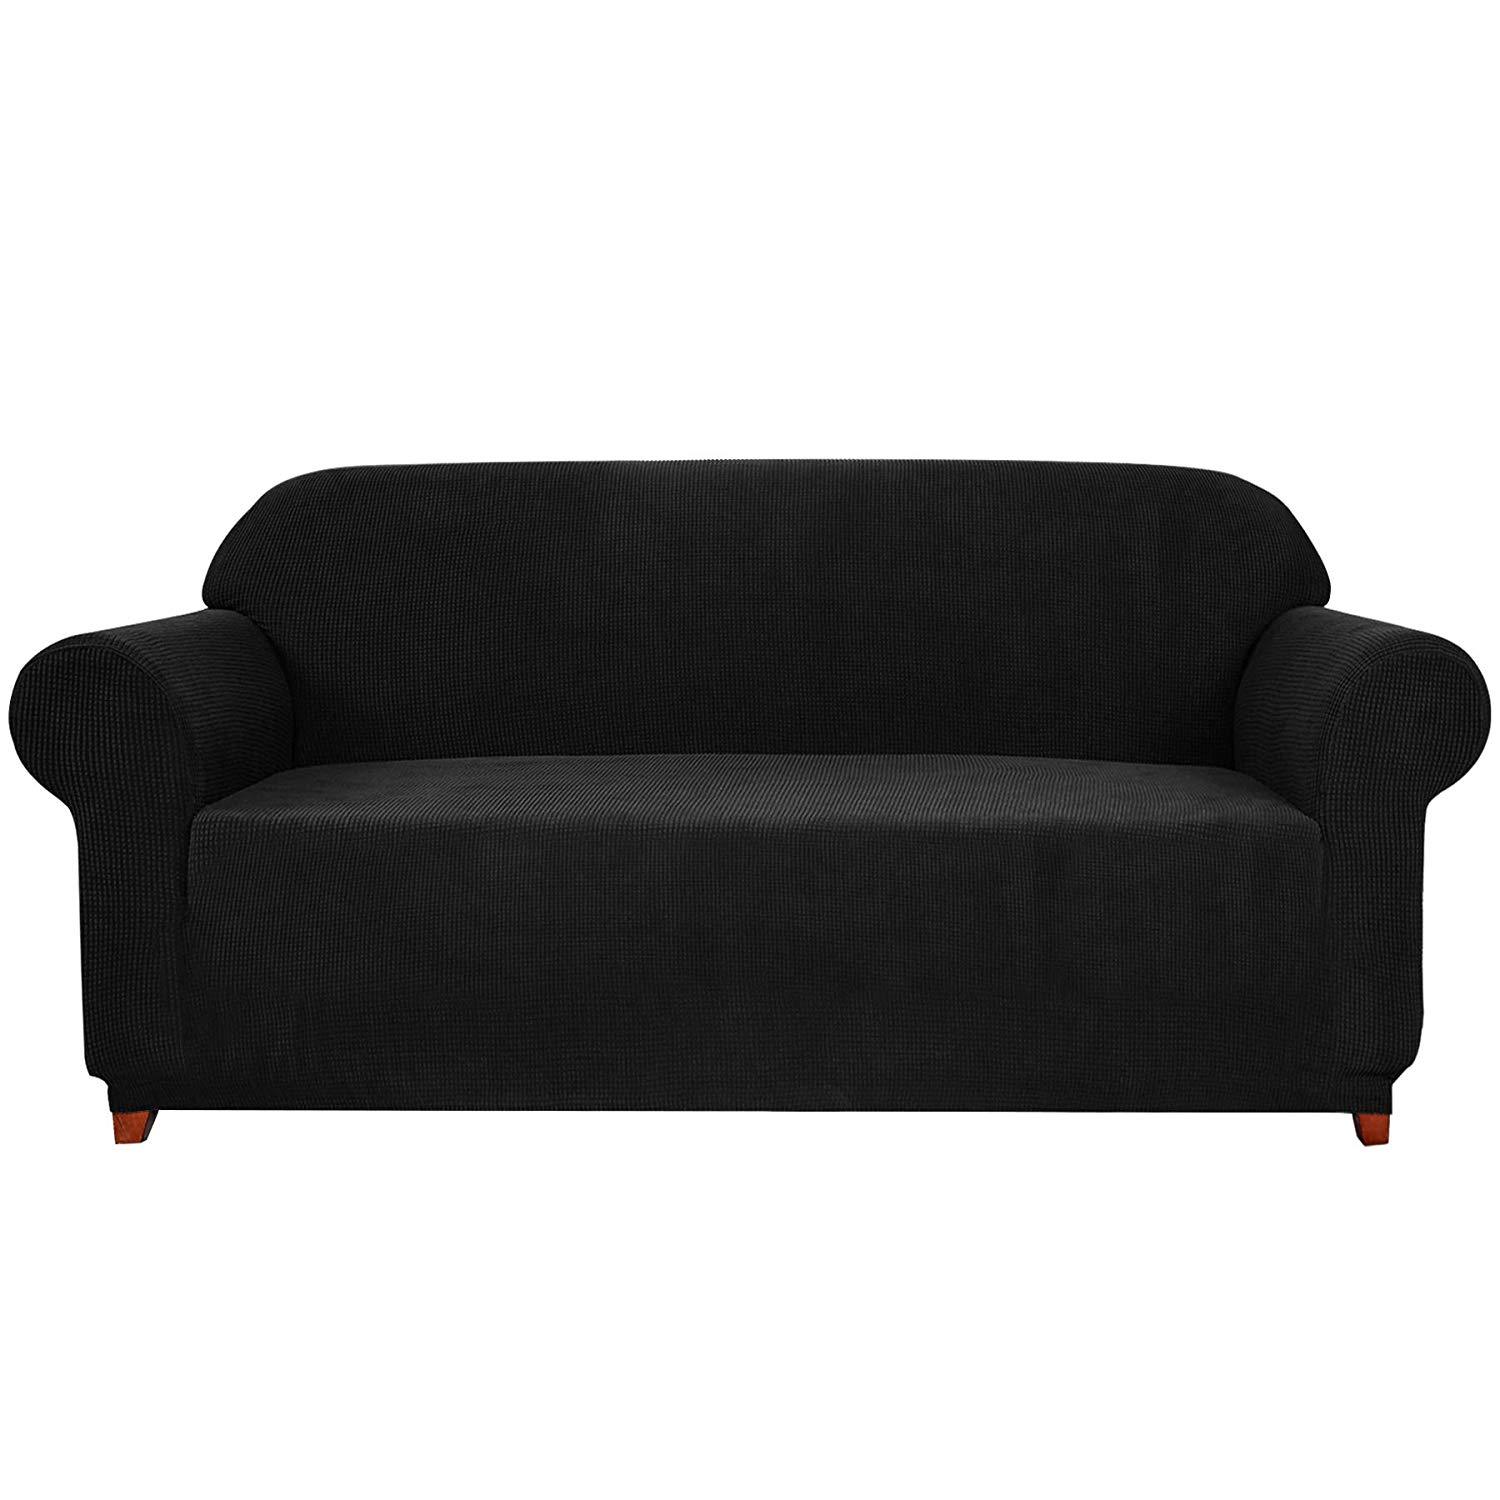 Loveseat / Black Plaid Sofa / Black Plaid X-Large / Black Plaid